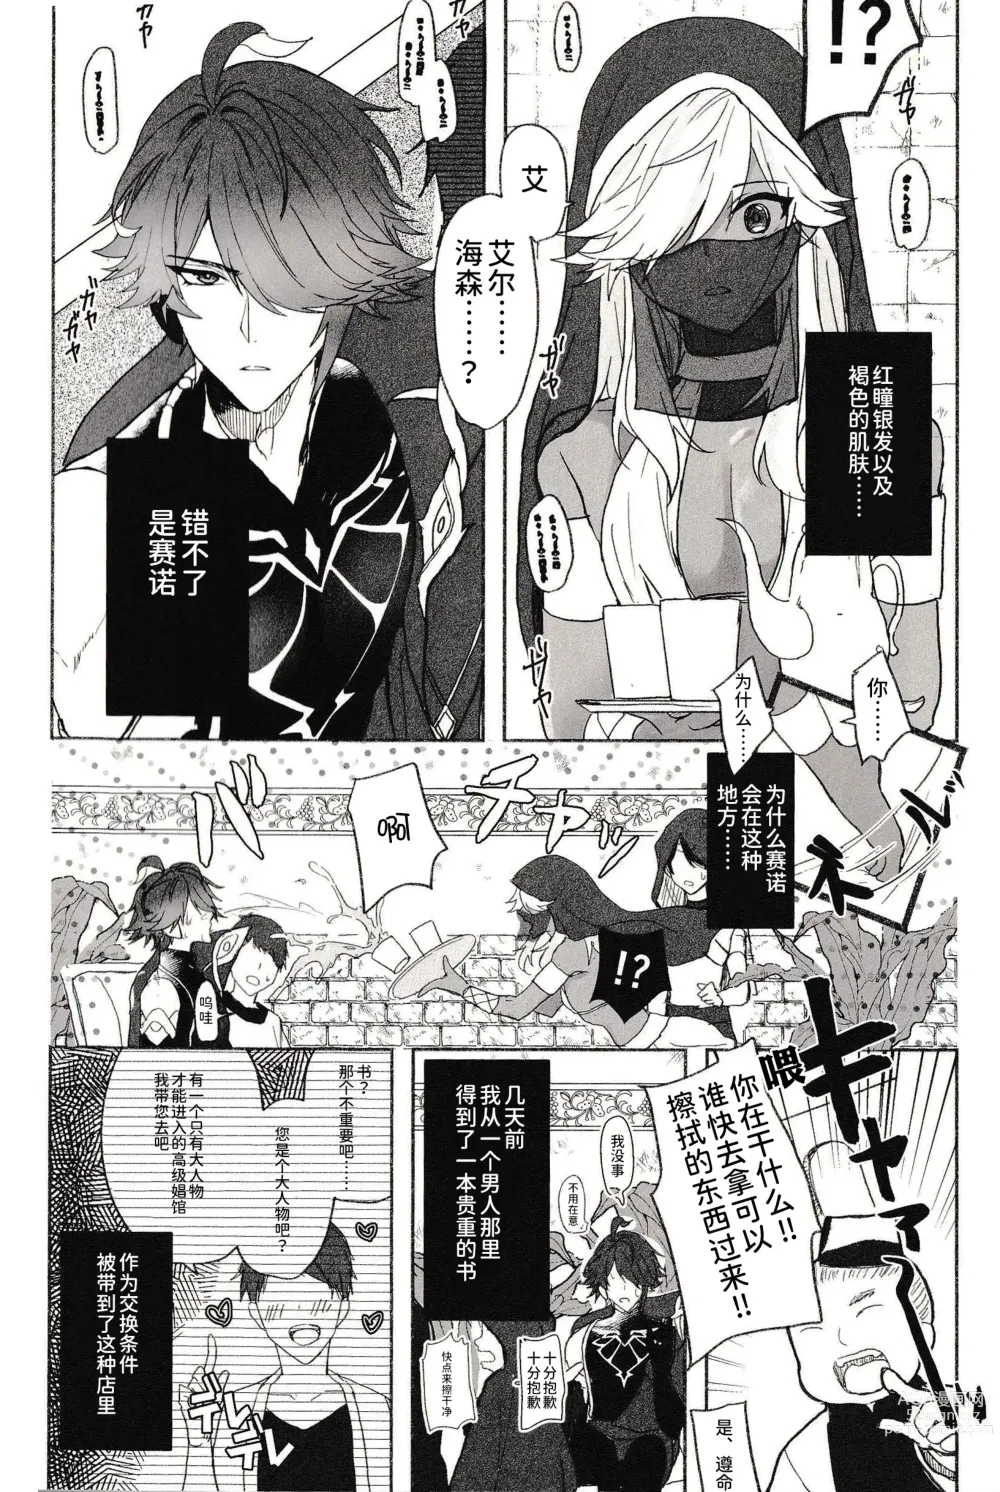 Page 6 of doujinshi Gokko Asobi